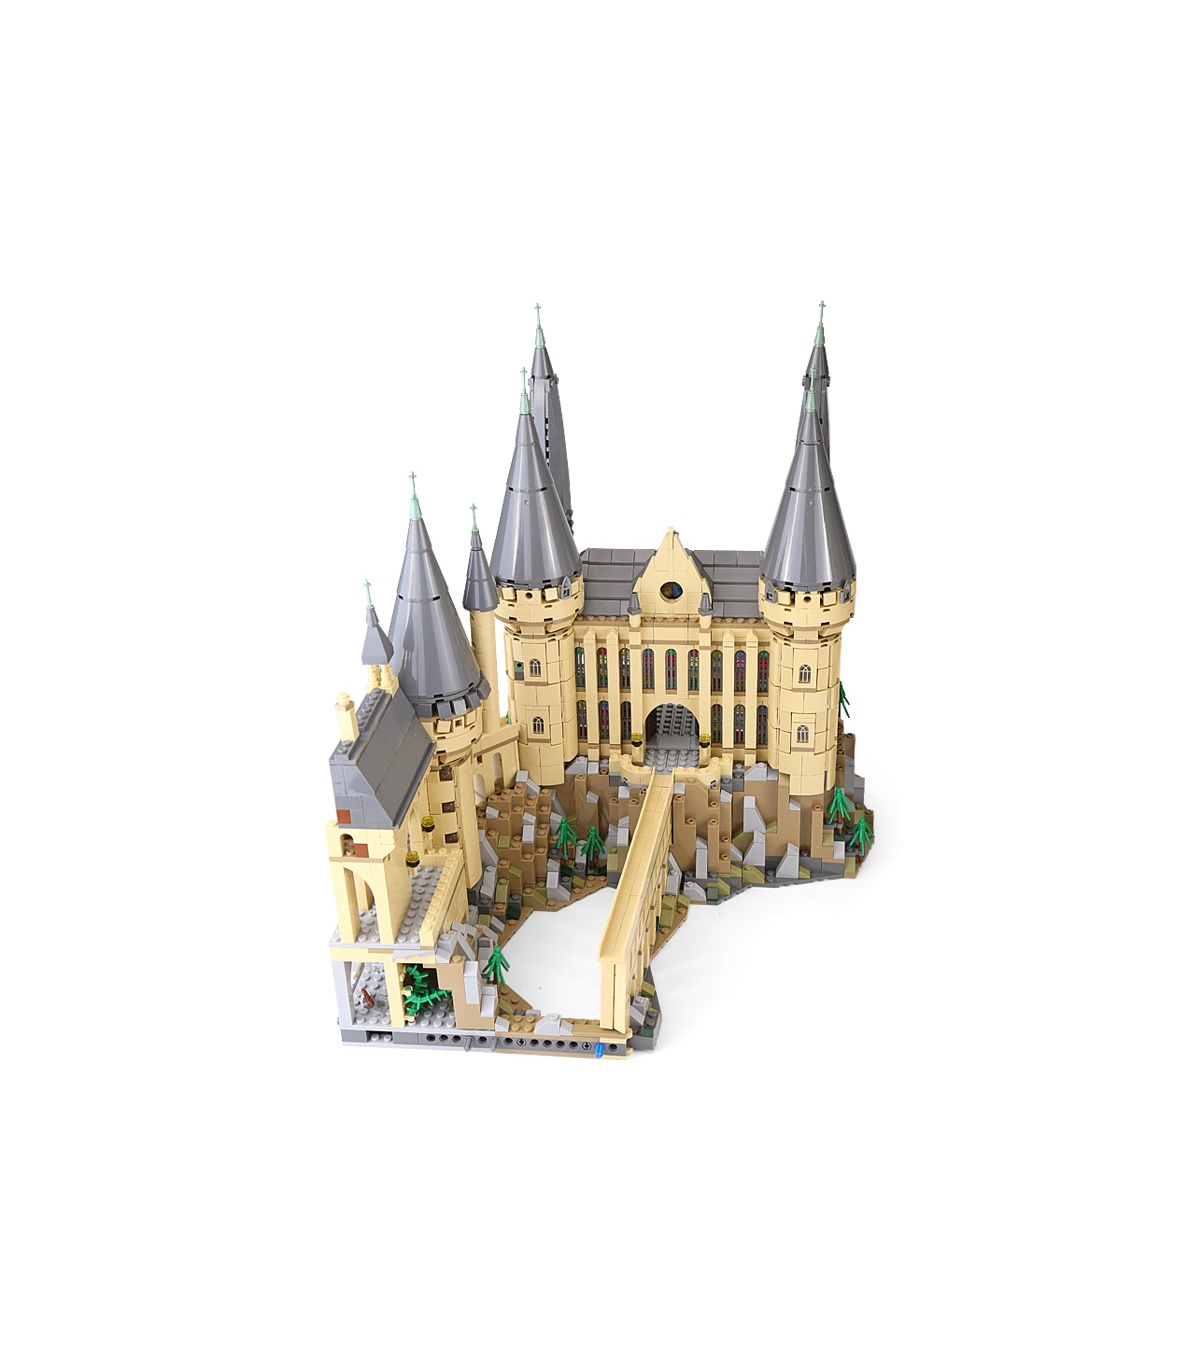 Lego Harry Potter Hogwarts Castle, Building Toys